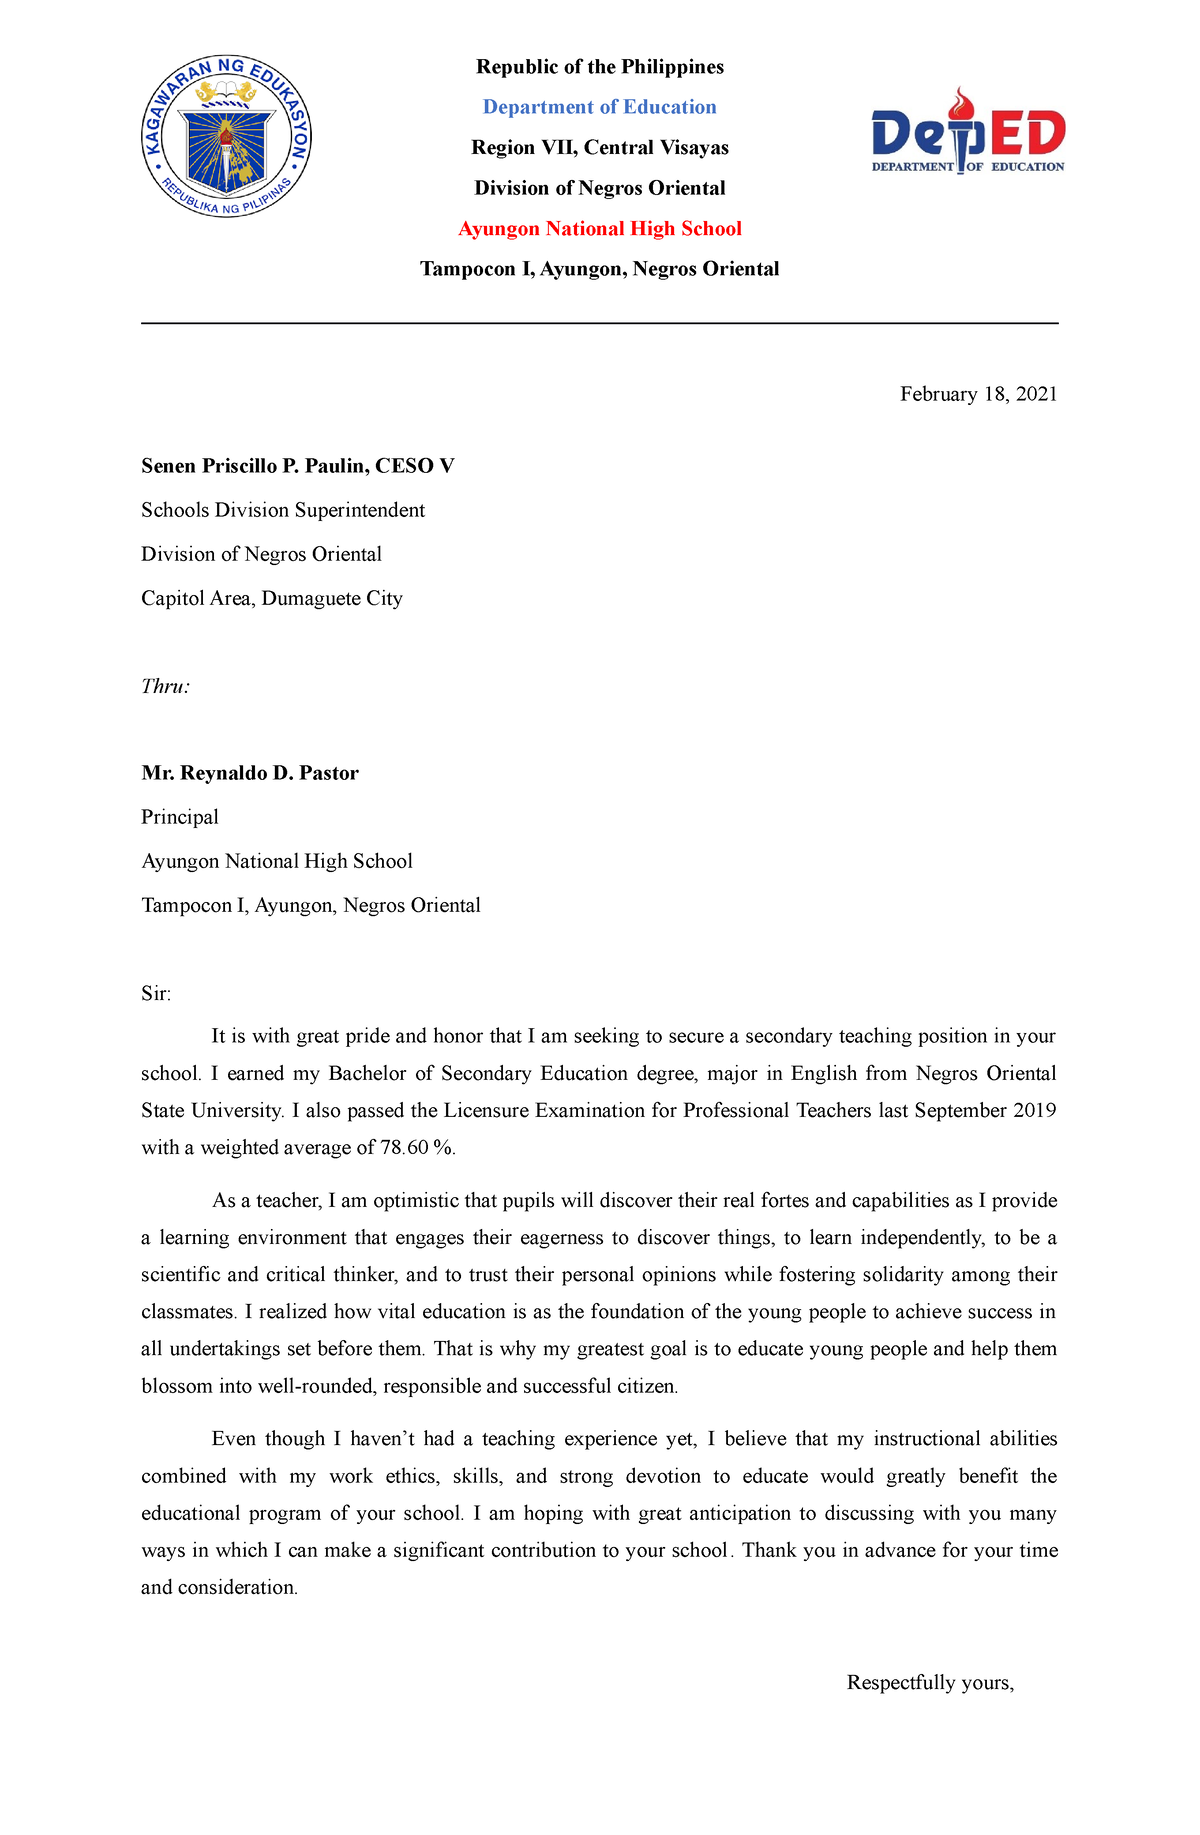 sample application letter for teacher in public school (deped)